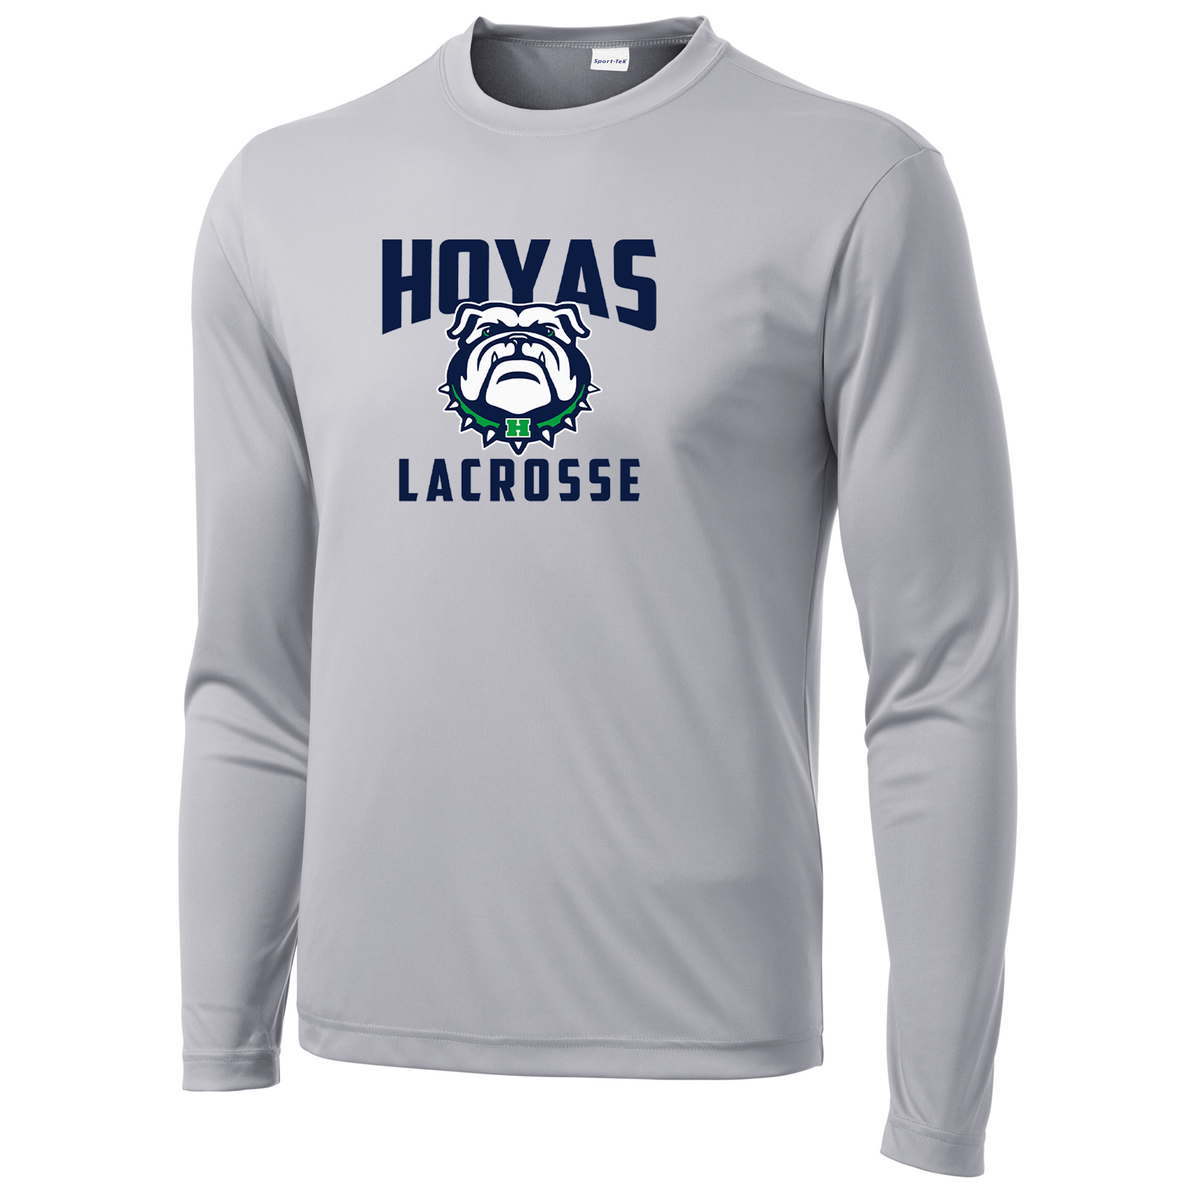 Hoya Lacrosse Long Sleeve Performance Shirt